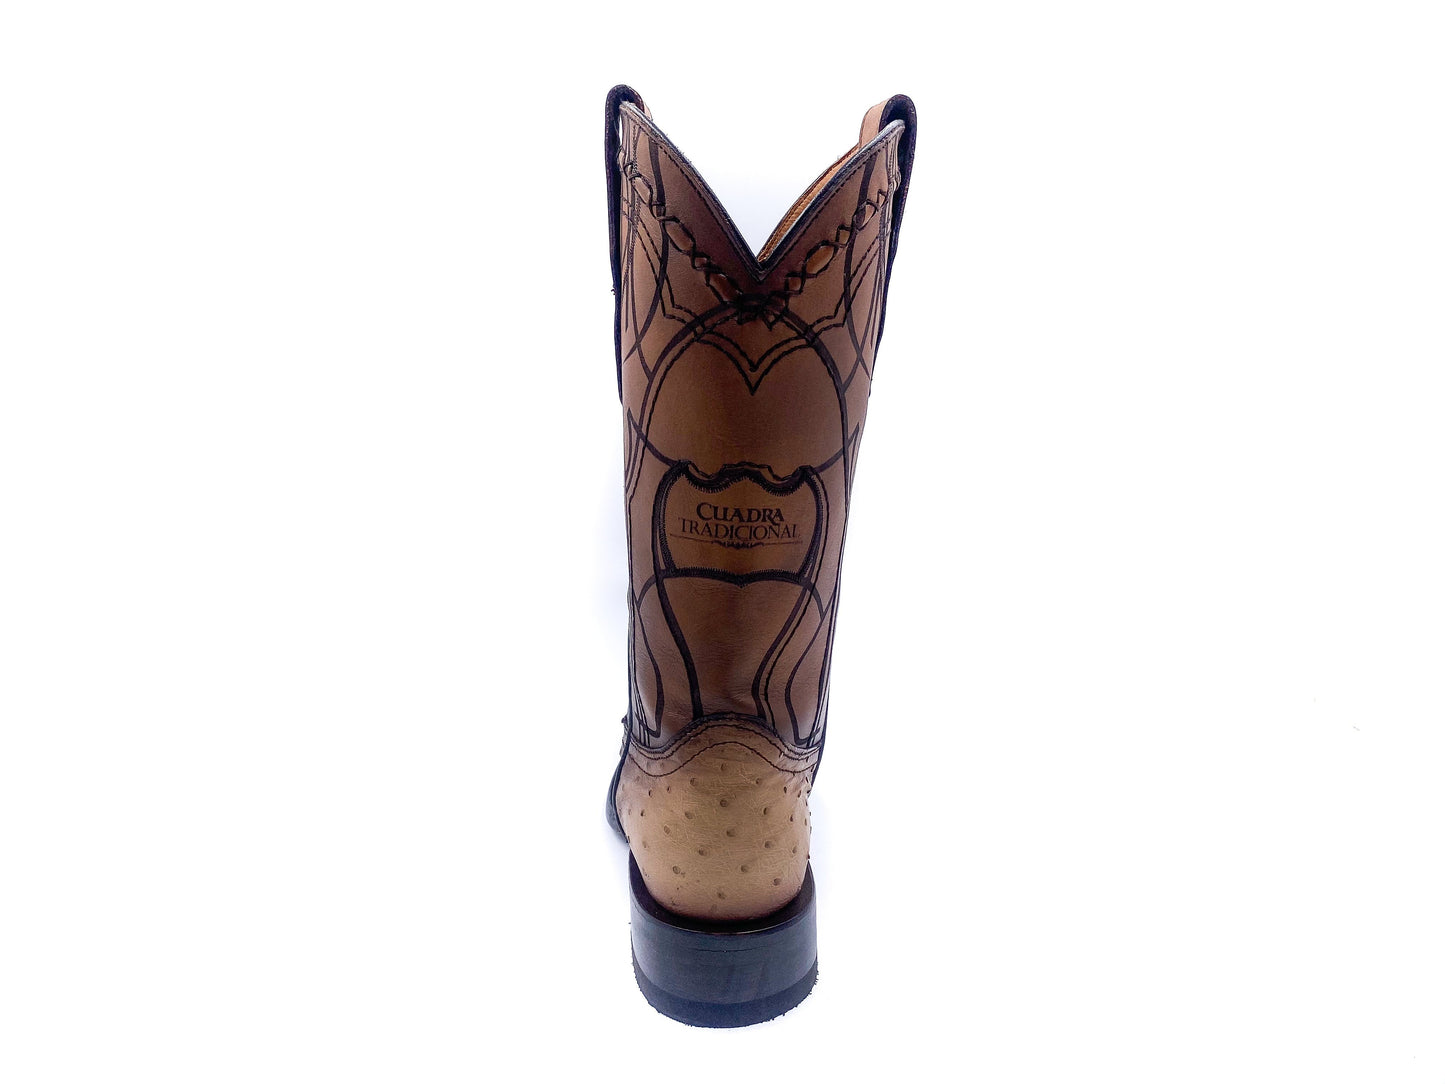 3Z1OA1 - Cuadra orix classic cowboy rodeo ostrich leather boots for men-CUADRA-Kuet-Cuadra-Boots